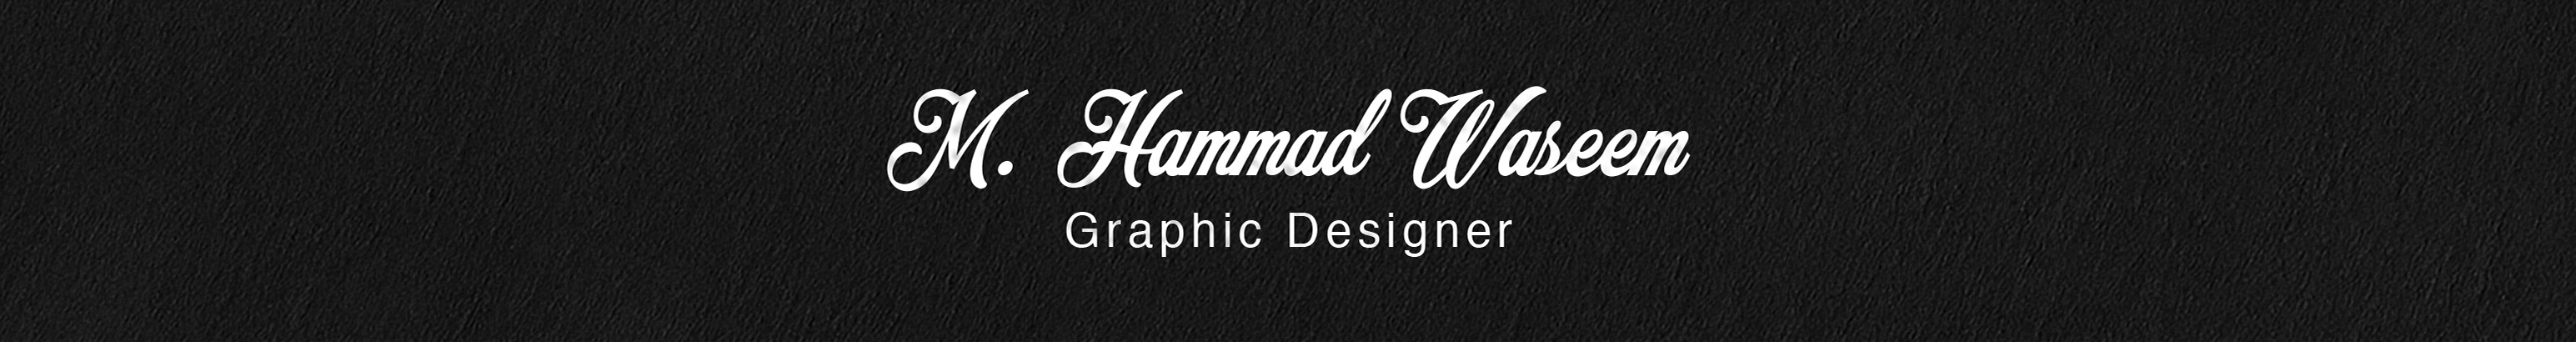 Muhammad Hammad Waseem's profile banner